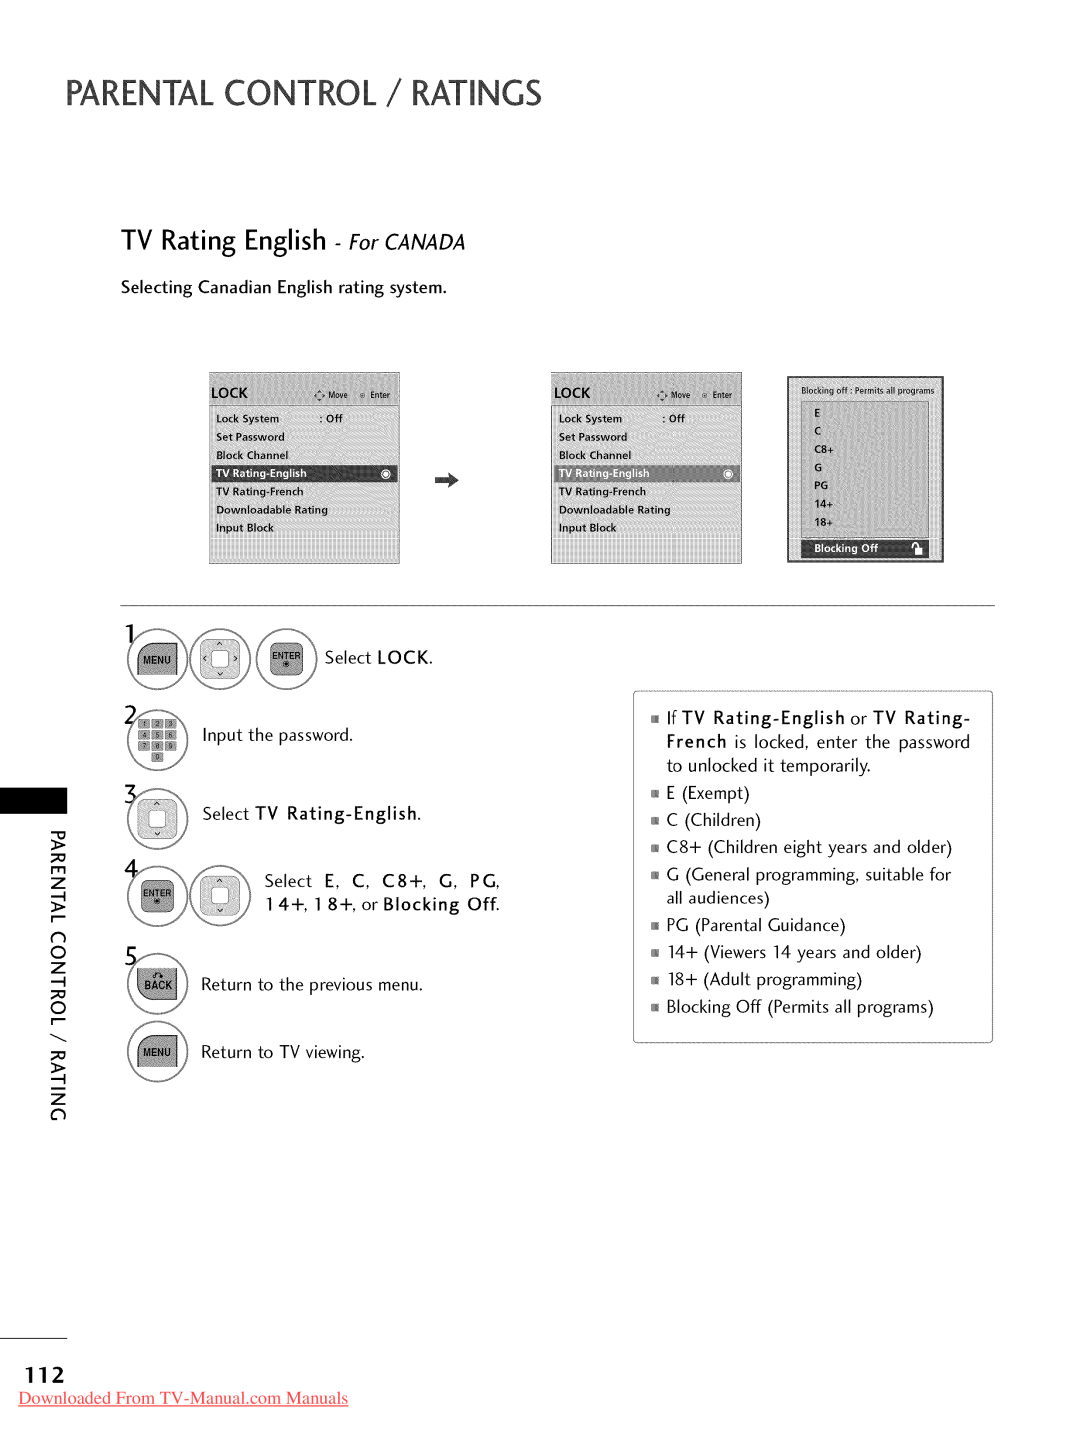 LG Electronics 32LD350 Parentalcontrol / Ratings, TV Rating English - ForCANADA, Downloaded From TV-Manual.com Manuals 